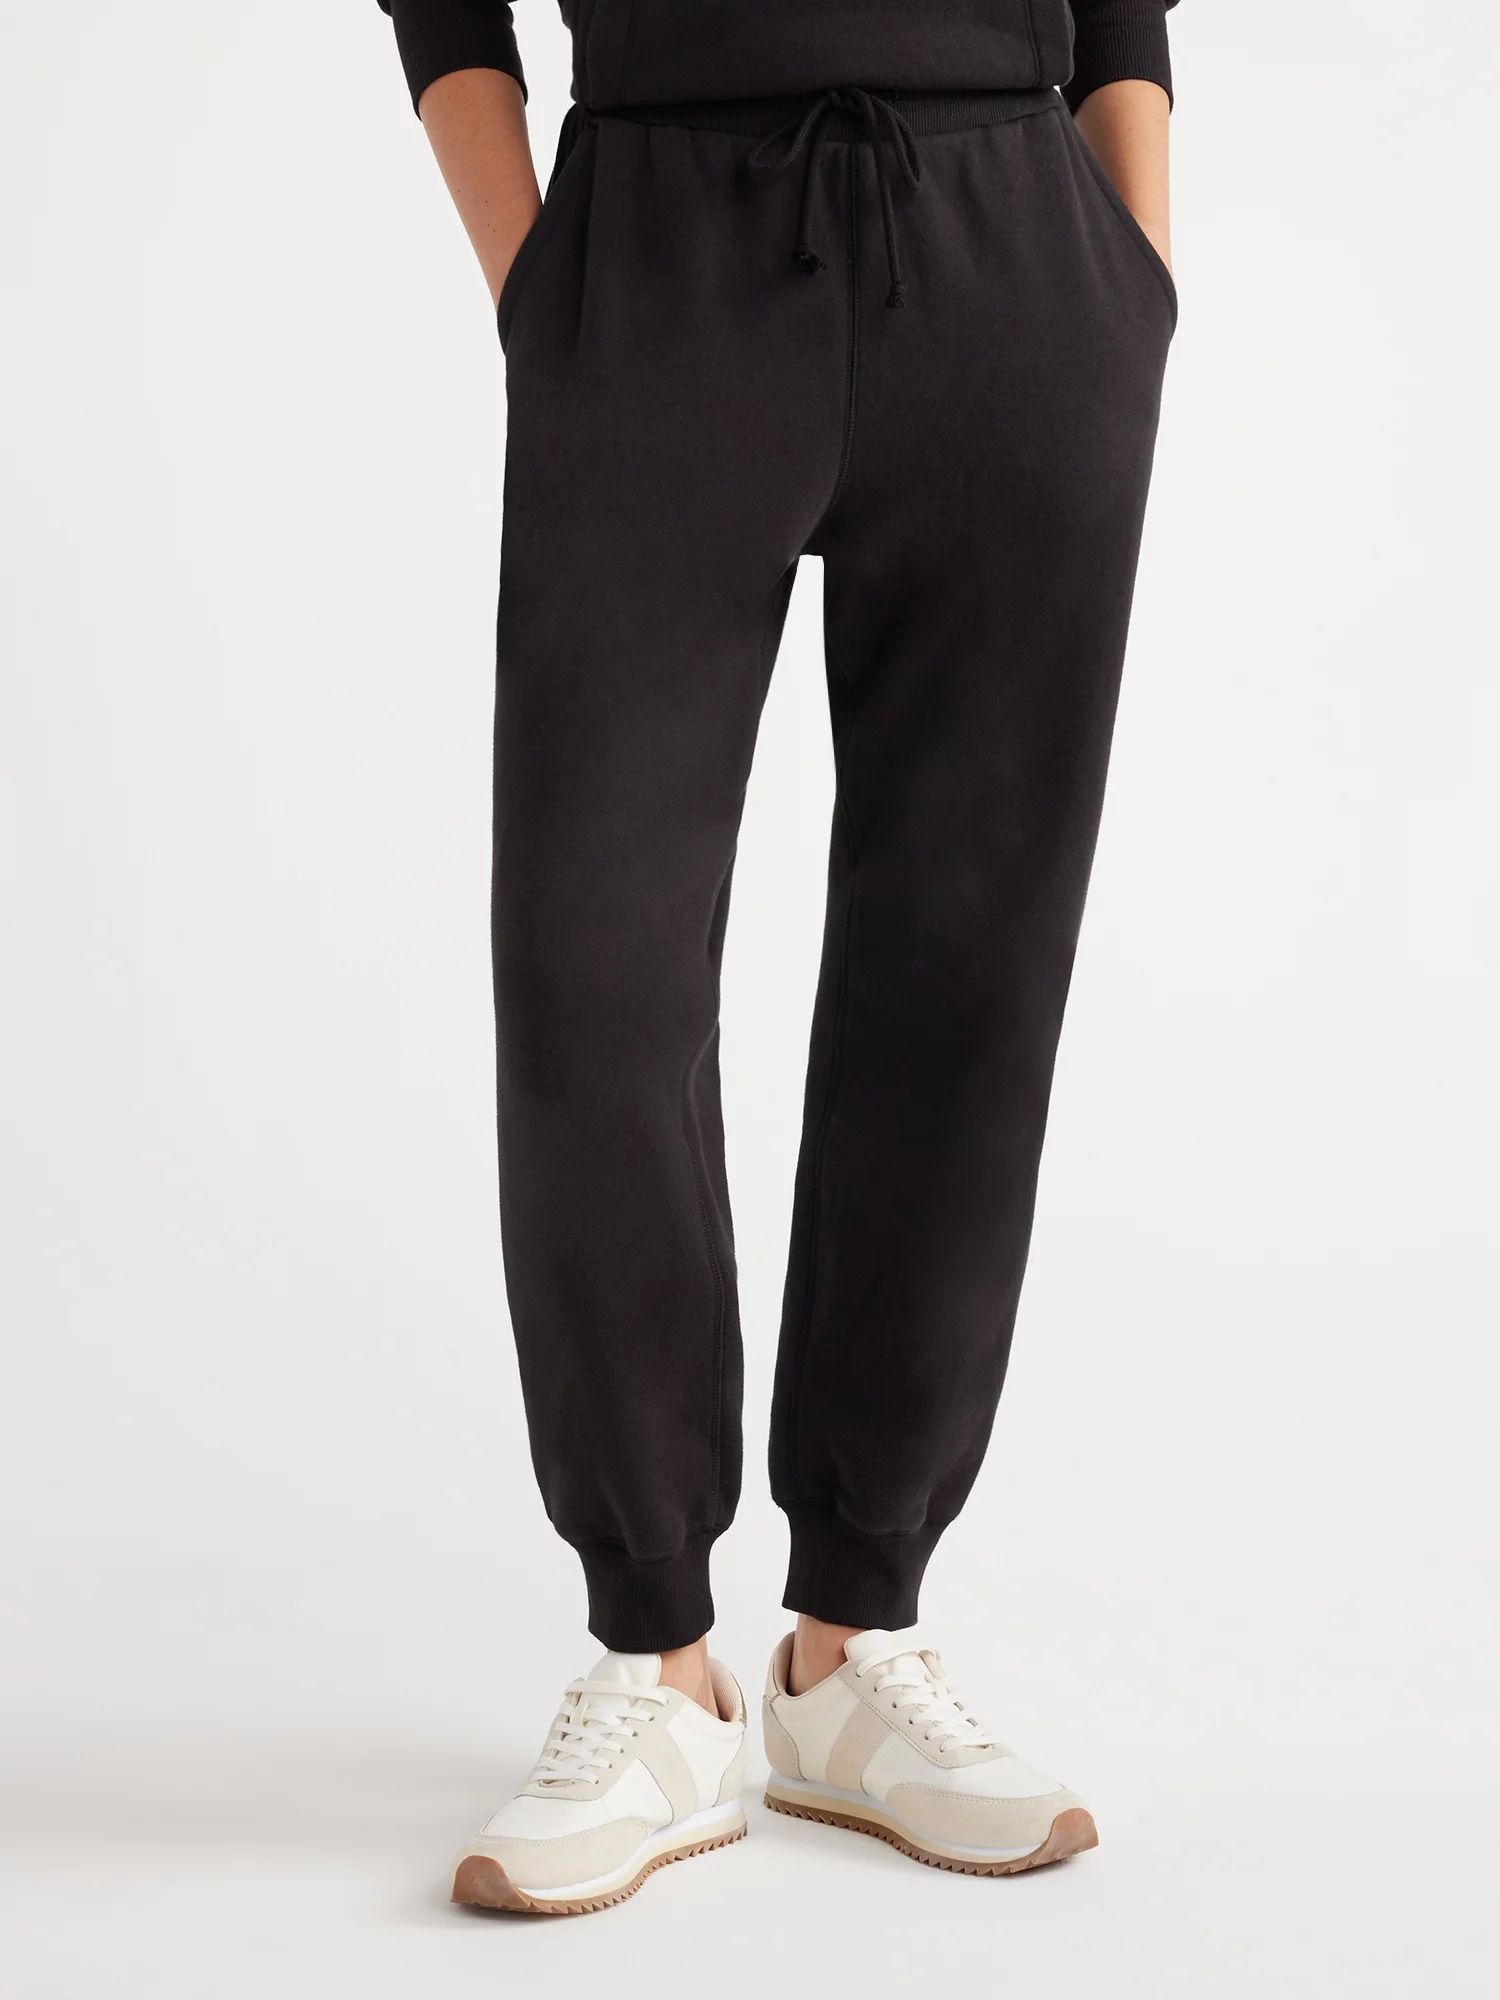 Free Assembly Women's Rib Cuff Sweatpants, 28” Inseam, Sizes XS-XXXL | Walmart (US)